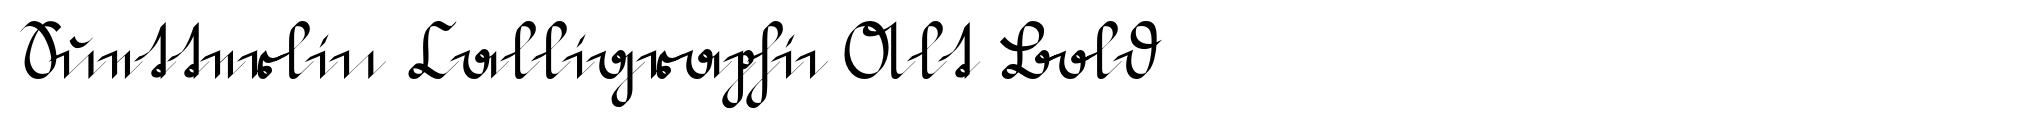 Suetterlin Calligraphic Alt Bold image